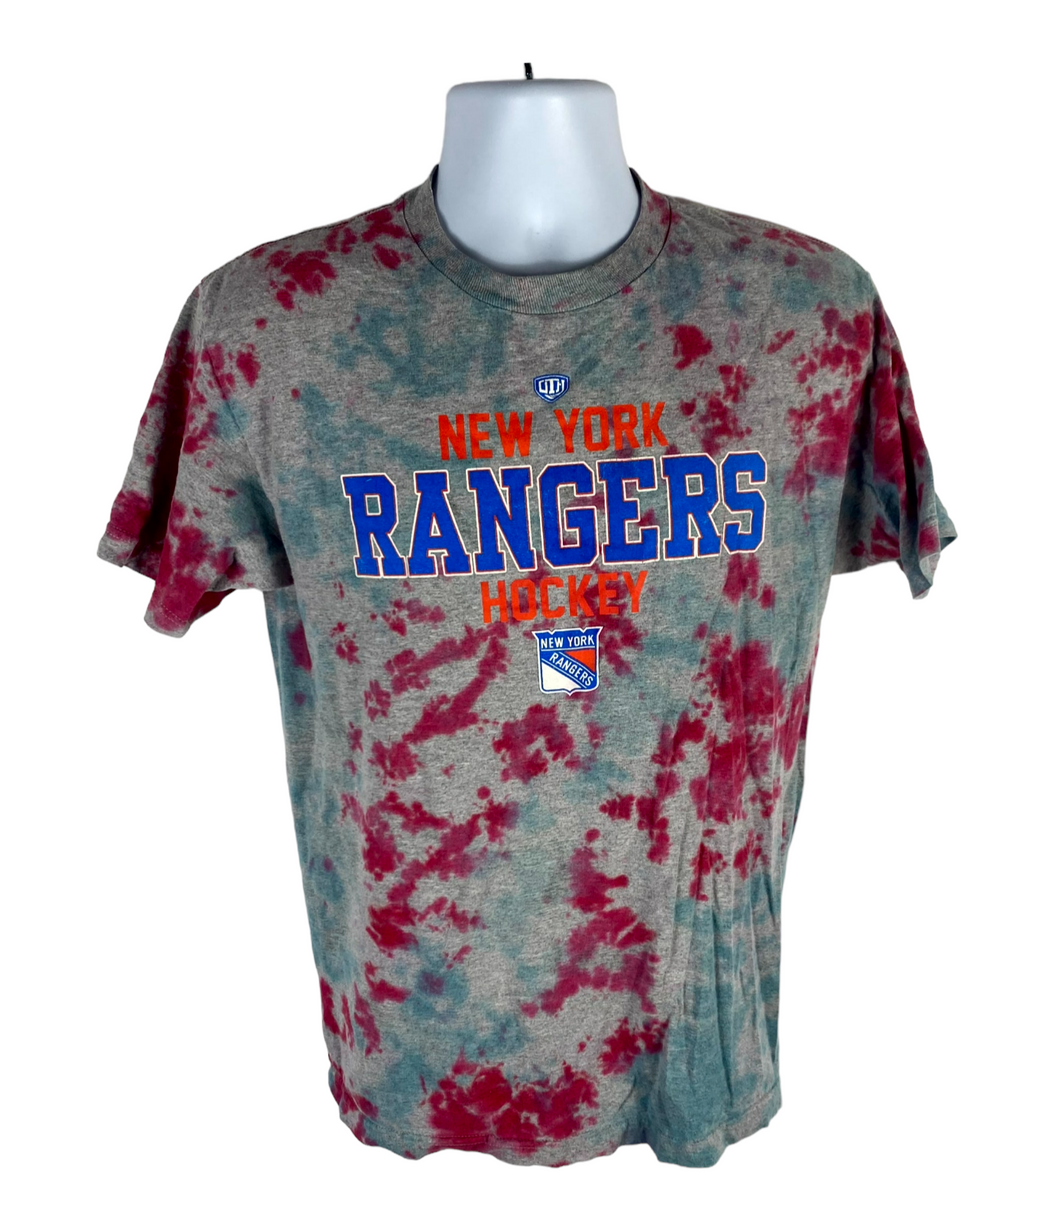 Hockey Crumple Dye T-Shirt - M